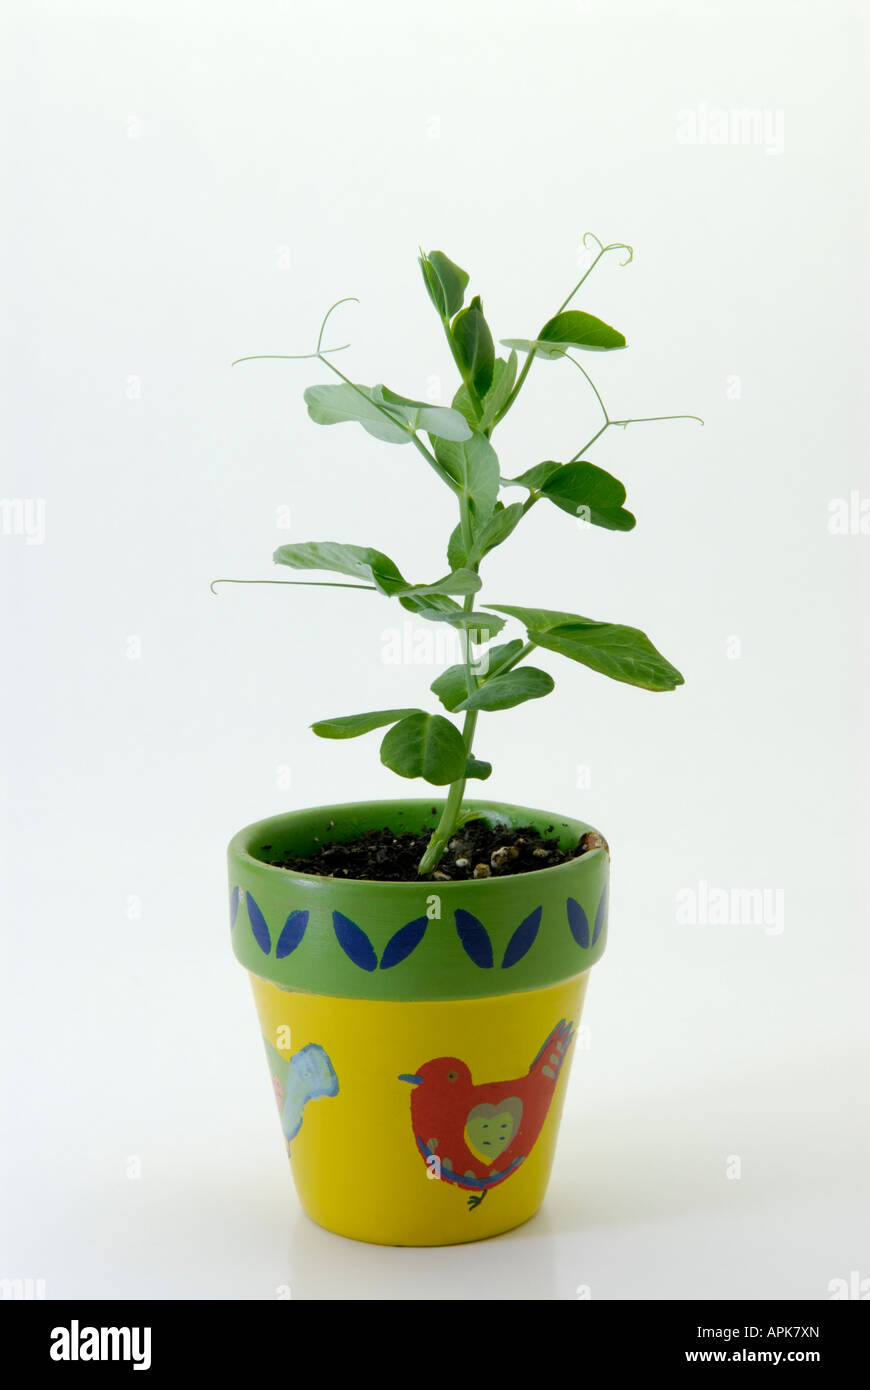 Garden pea Pisum sativum growing in colorful pot Stock Photo